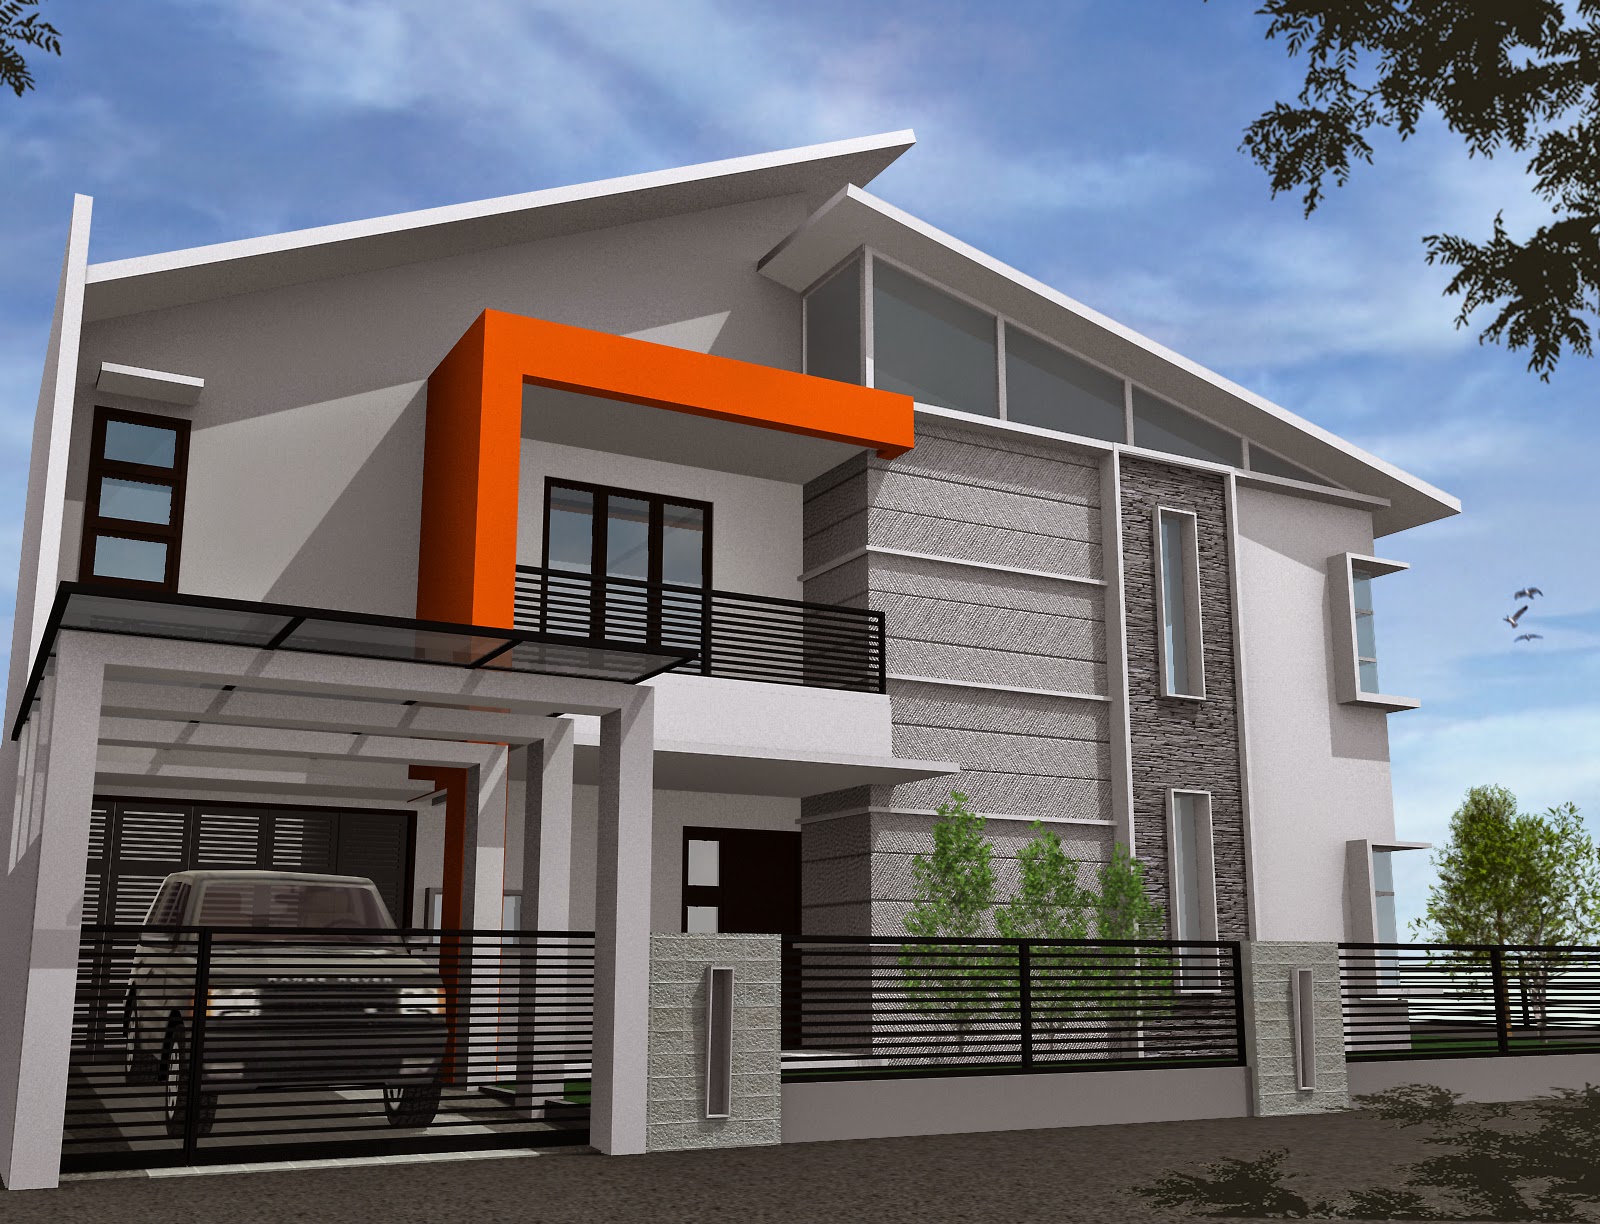  Arsitektur Rumah  Minimalis Terbaru Kumpulan Model Rumah  